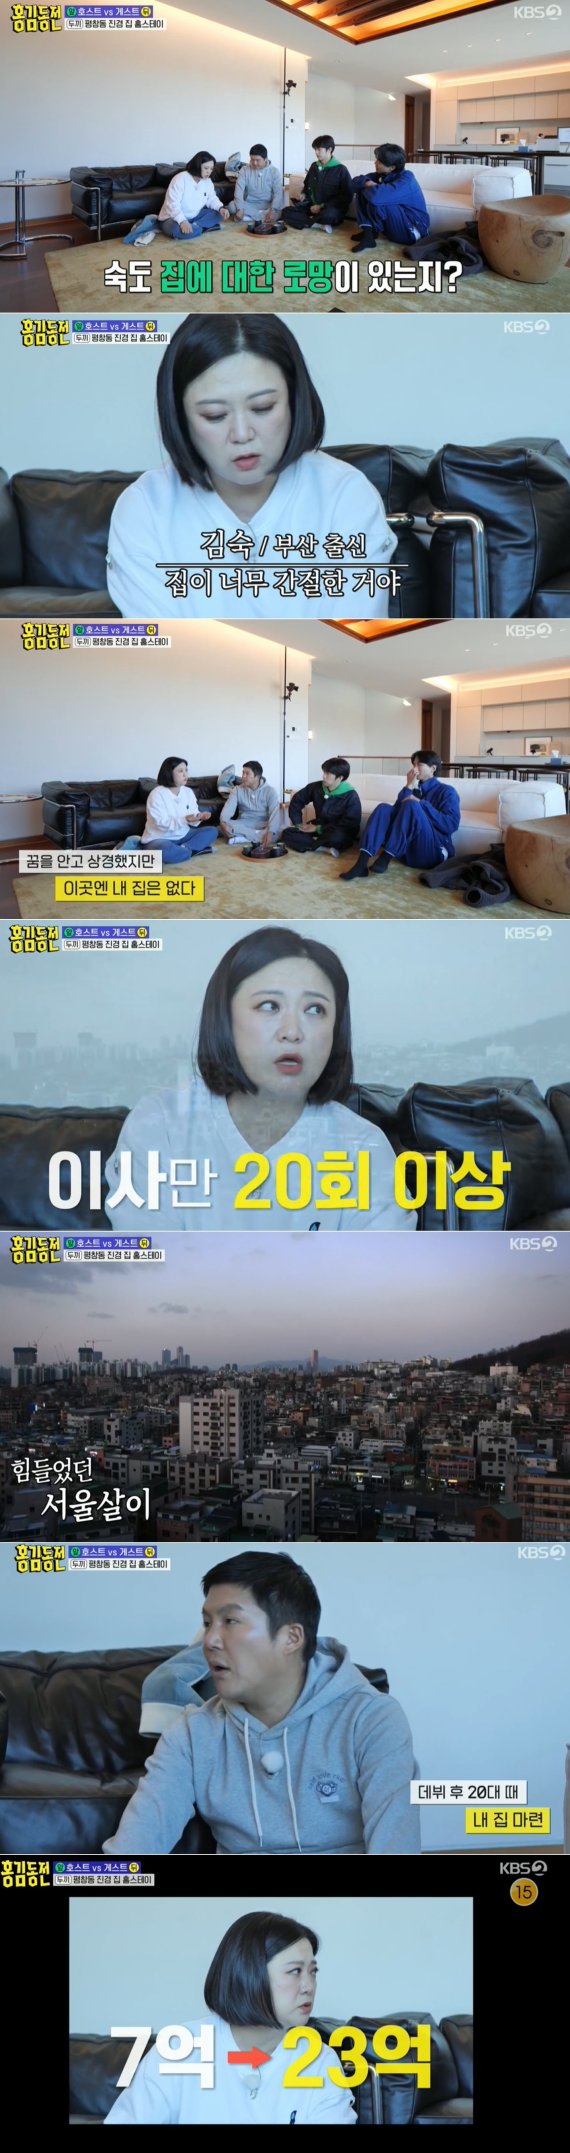 KBS 2TV 예능프로그램 '홍김동전' 방송 화면 갈무리